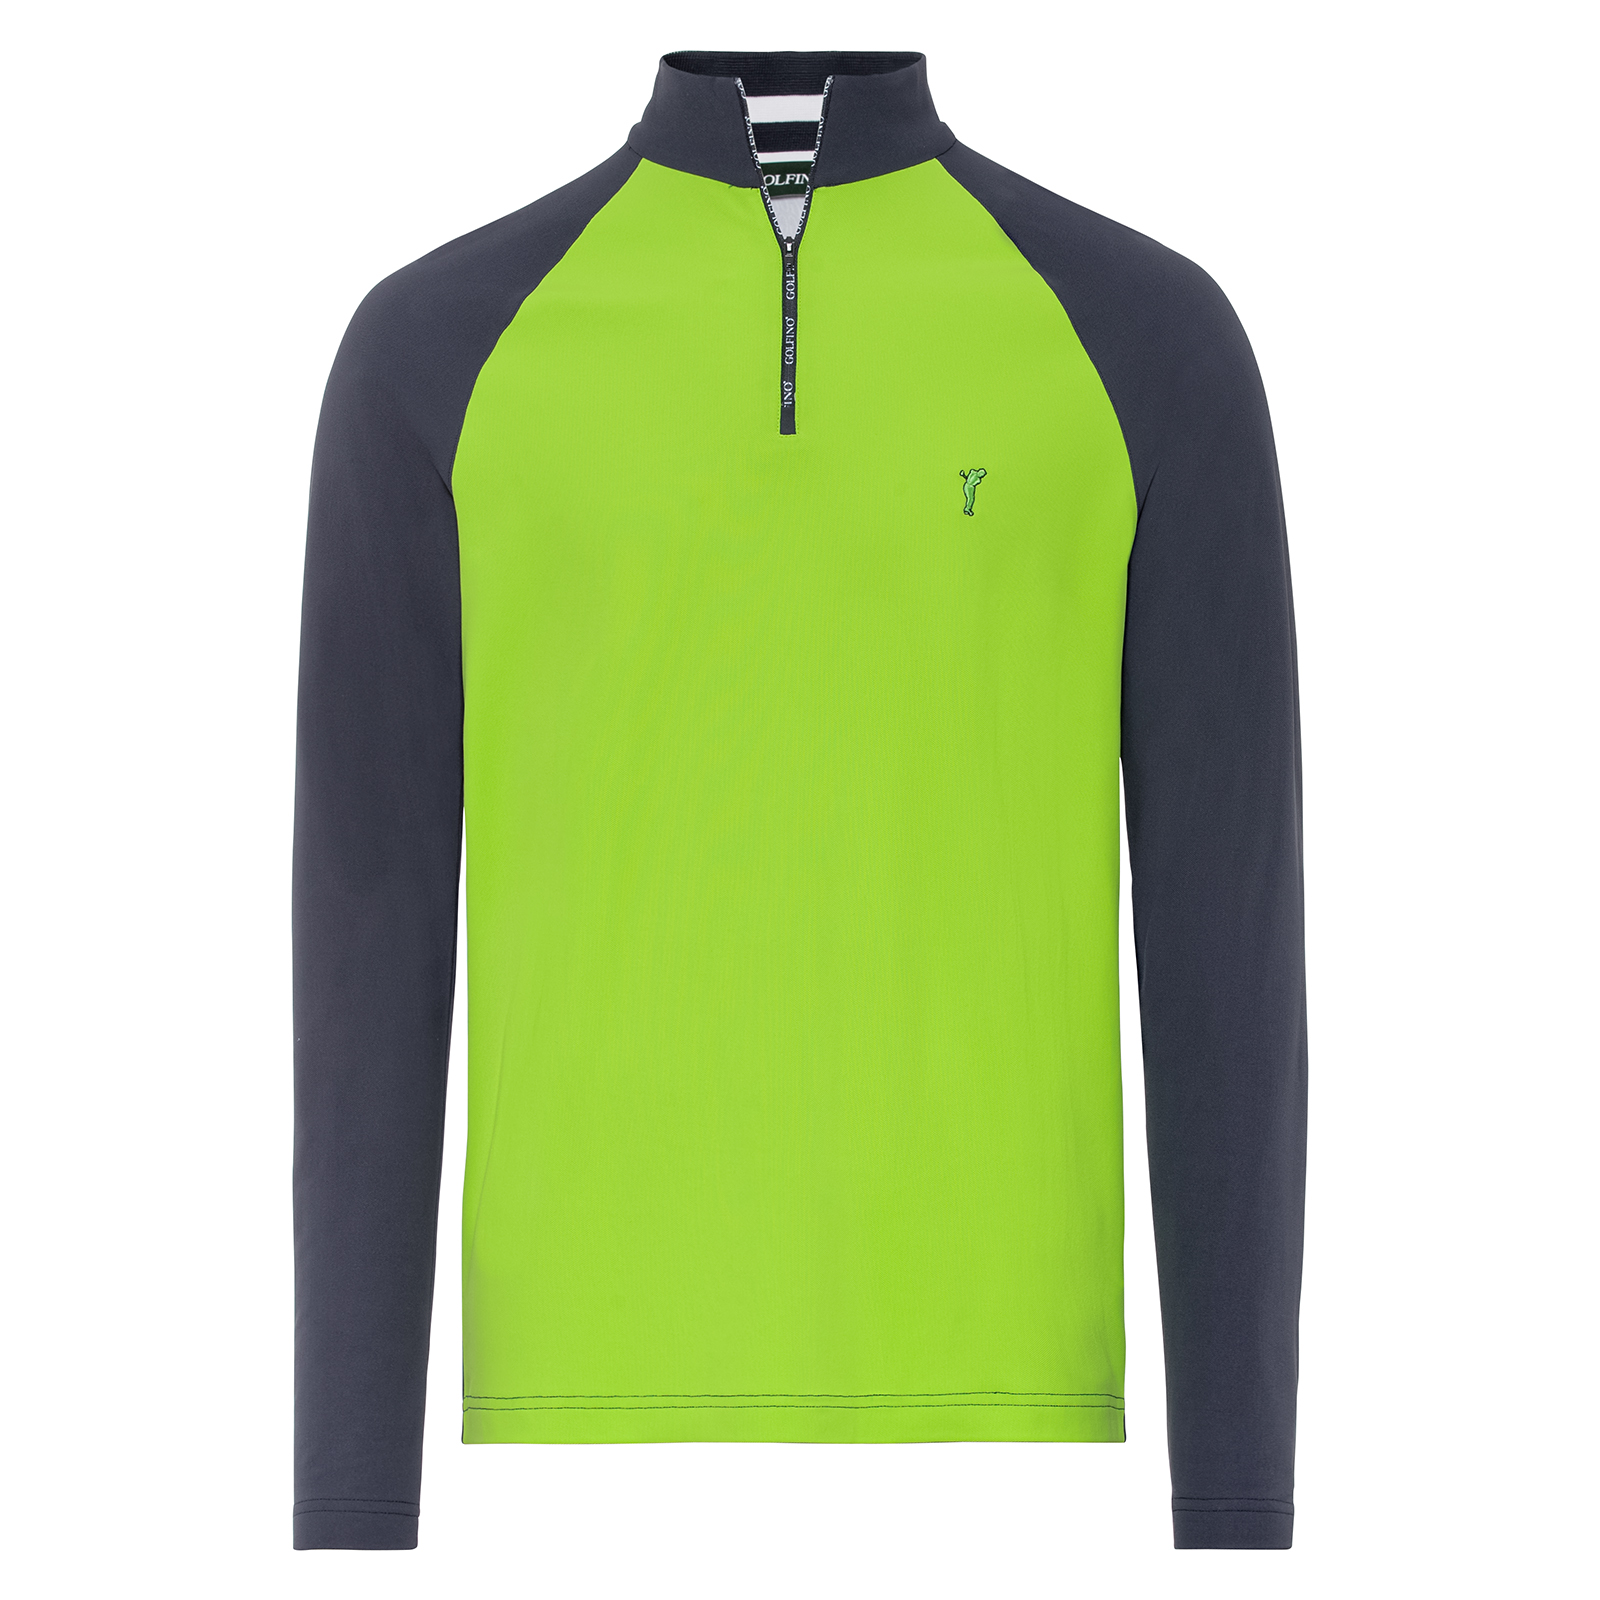 Men's functional half-zip golf sweater in colour blocking design